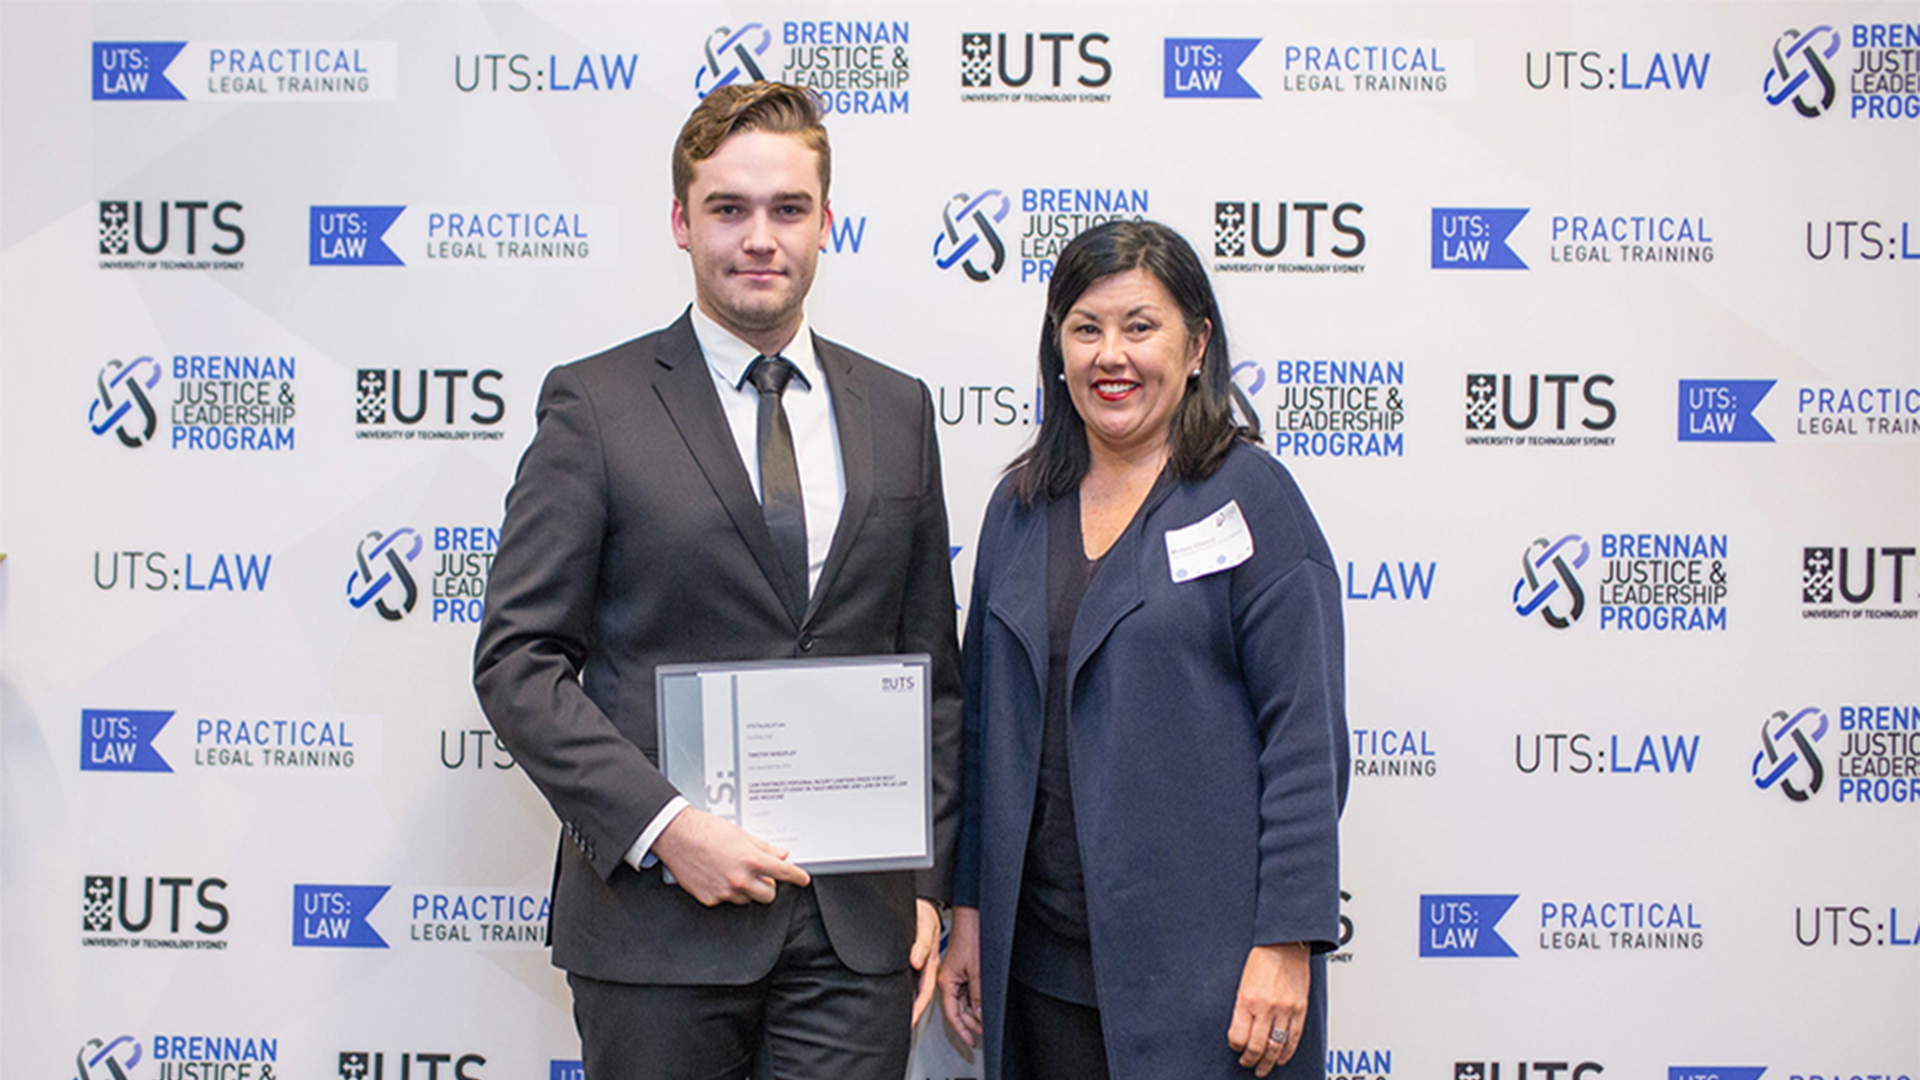 Law Partners Personal Injury Lawyers UTS Award 2017.